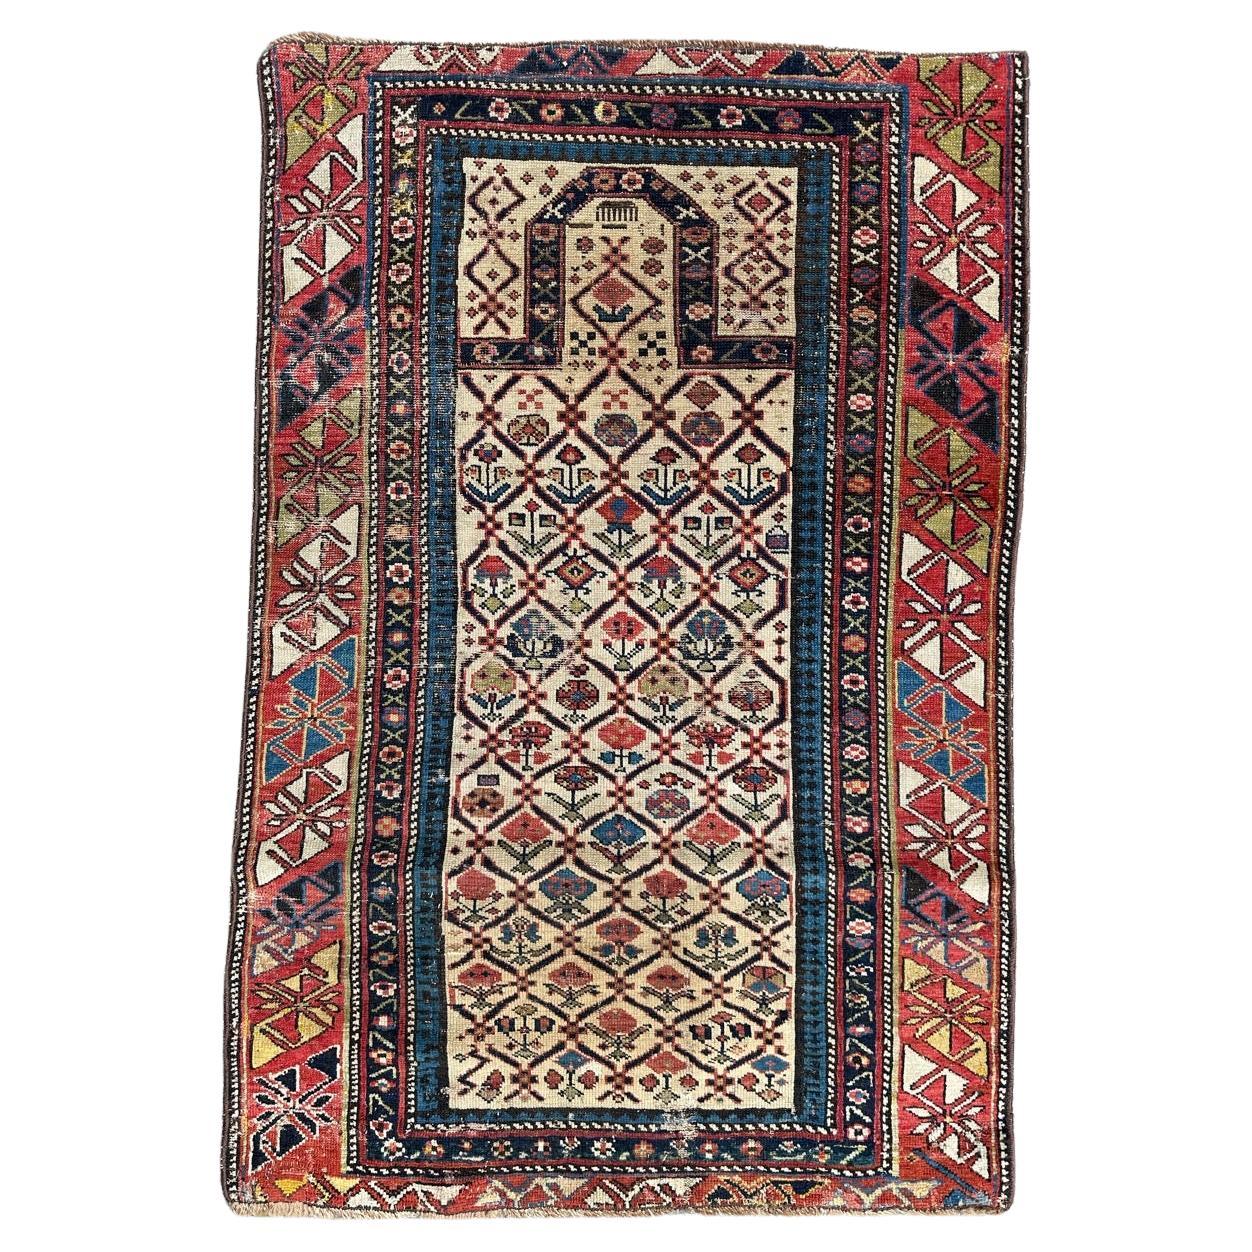 Bobyrug's Beautiful little antique shirvan daghistan rug 